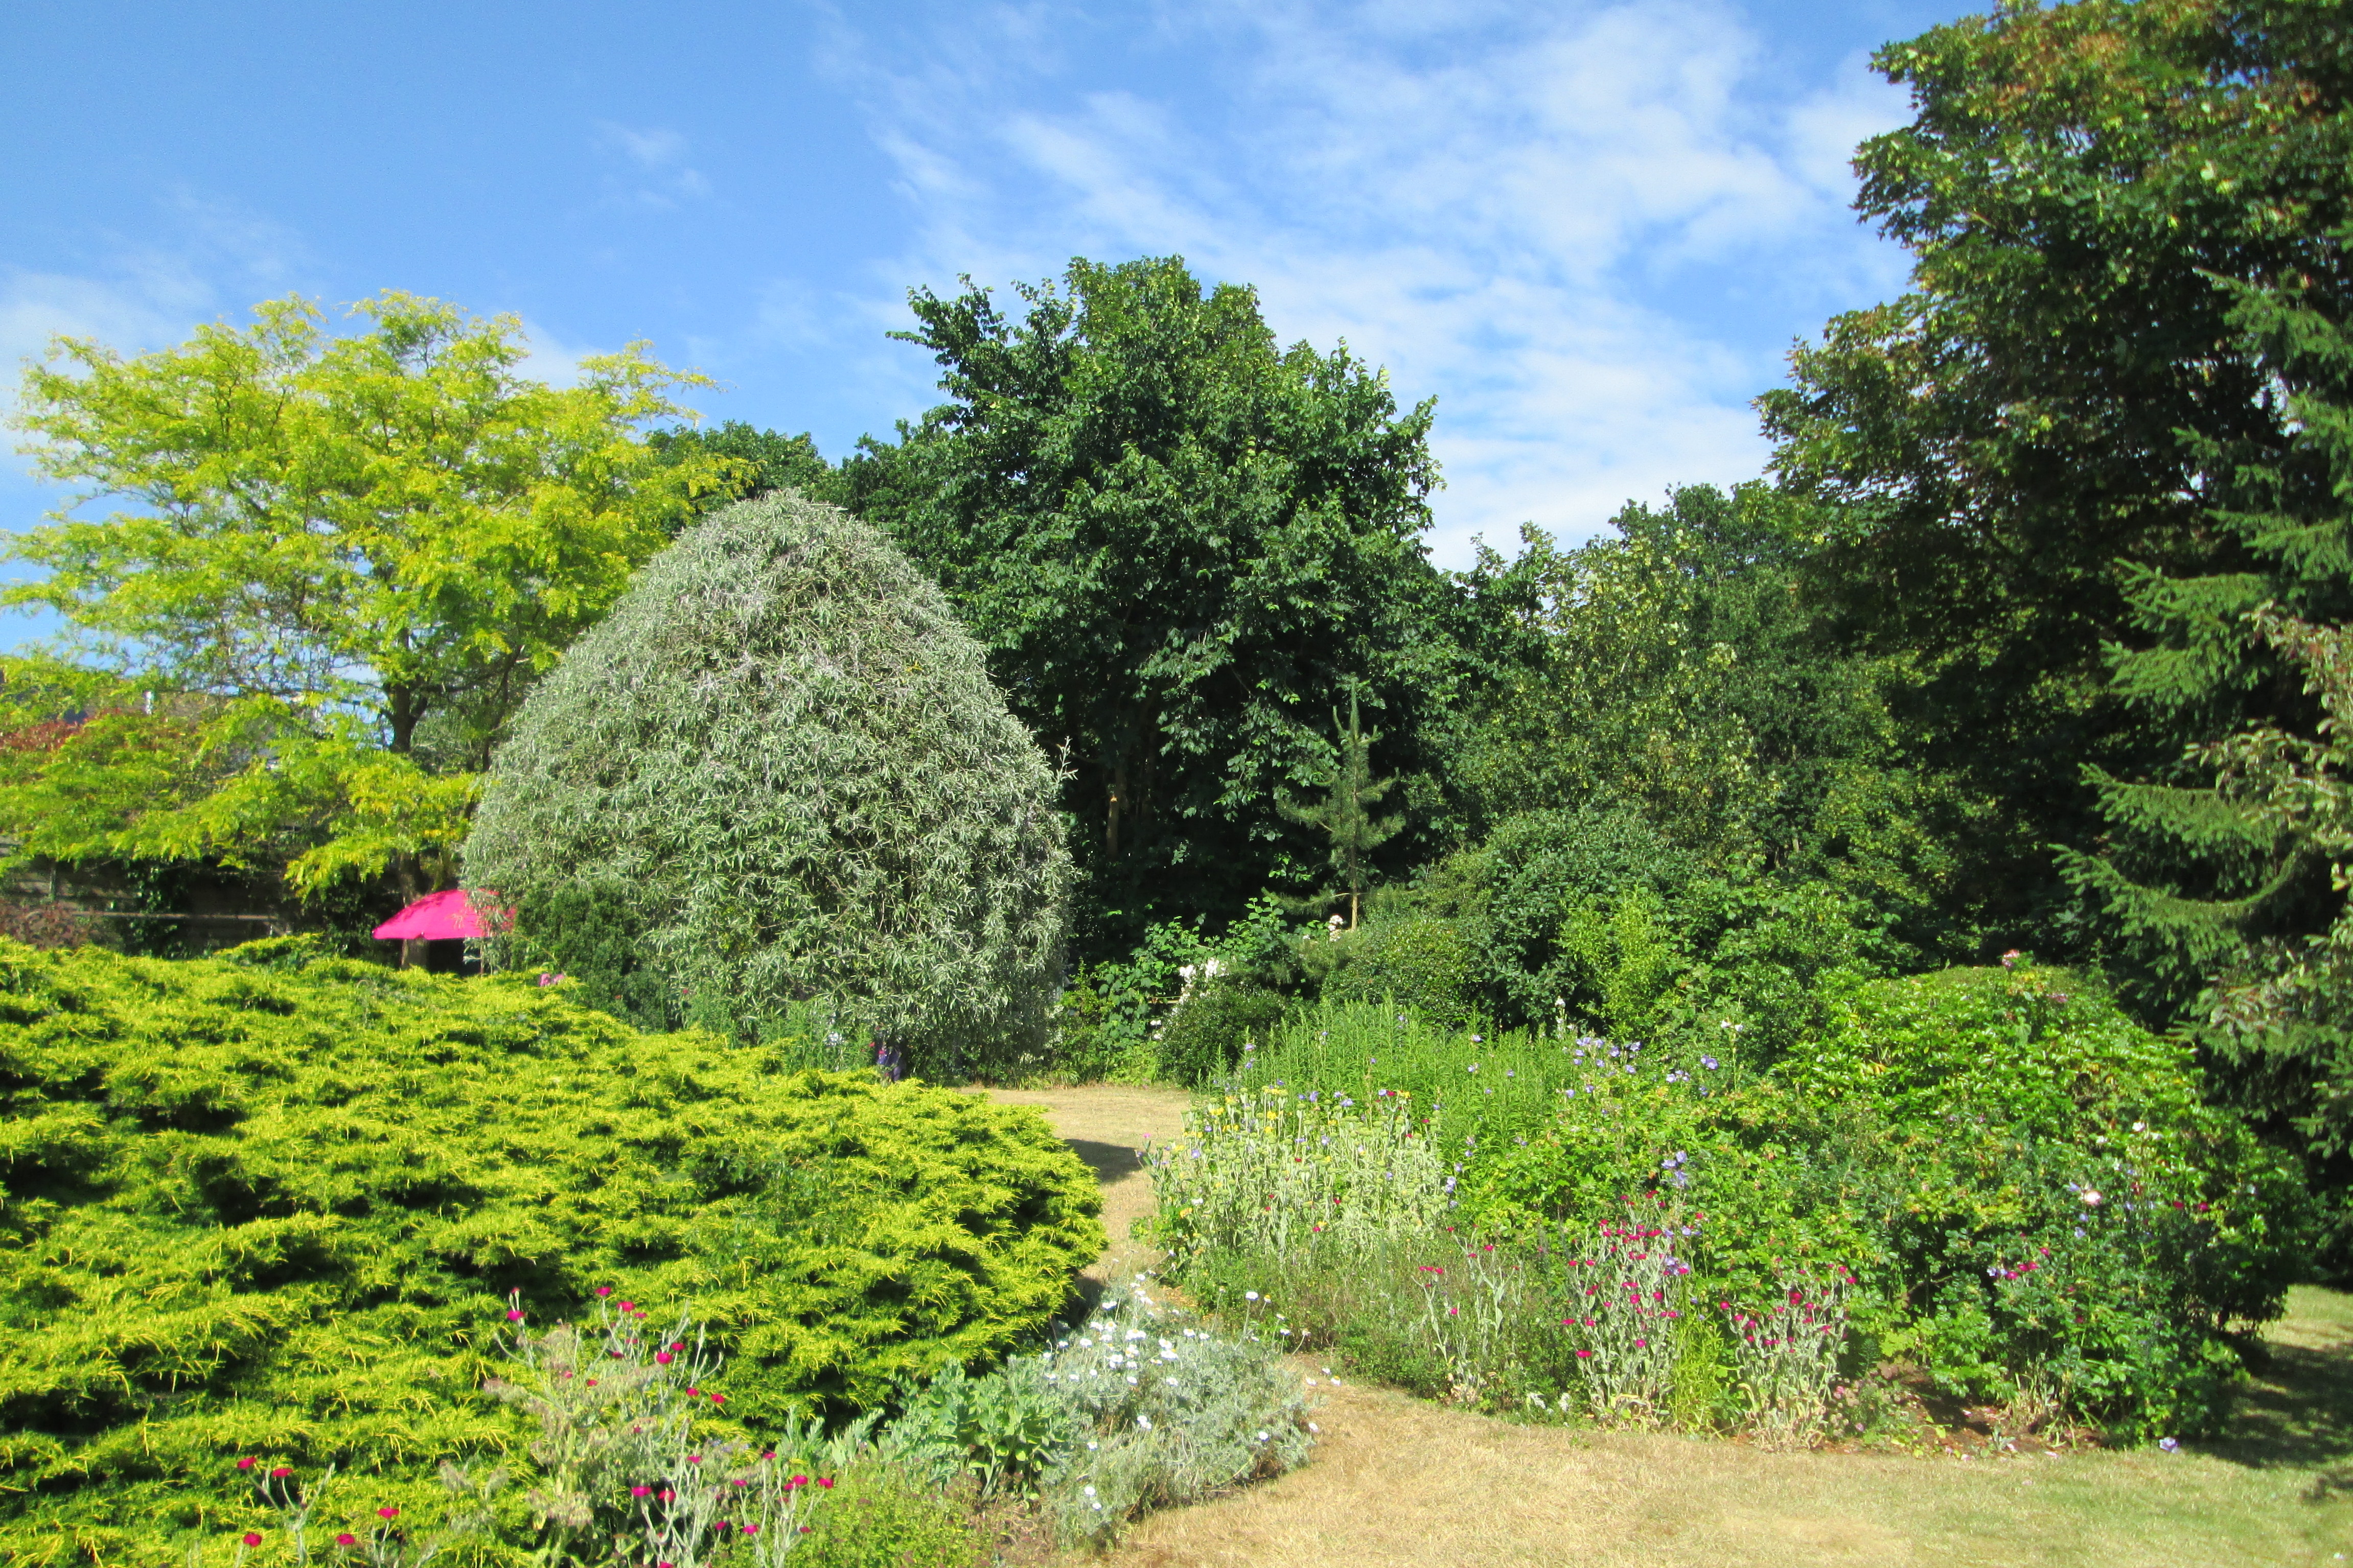 Snape Open Gardens on Sat 24th June